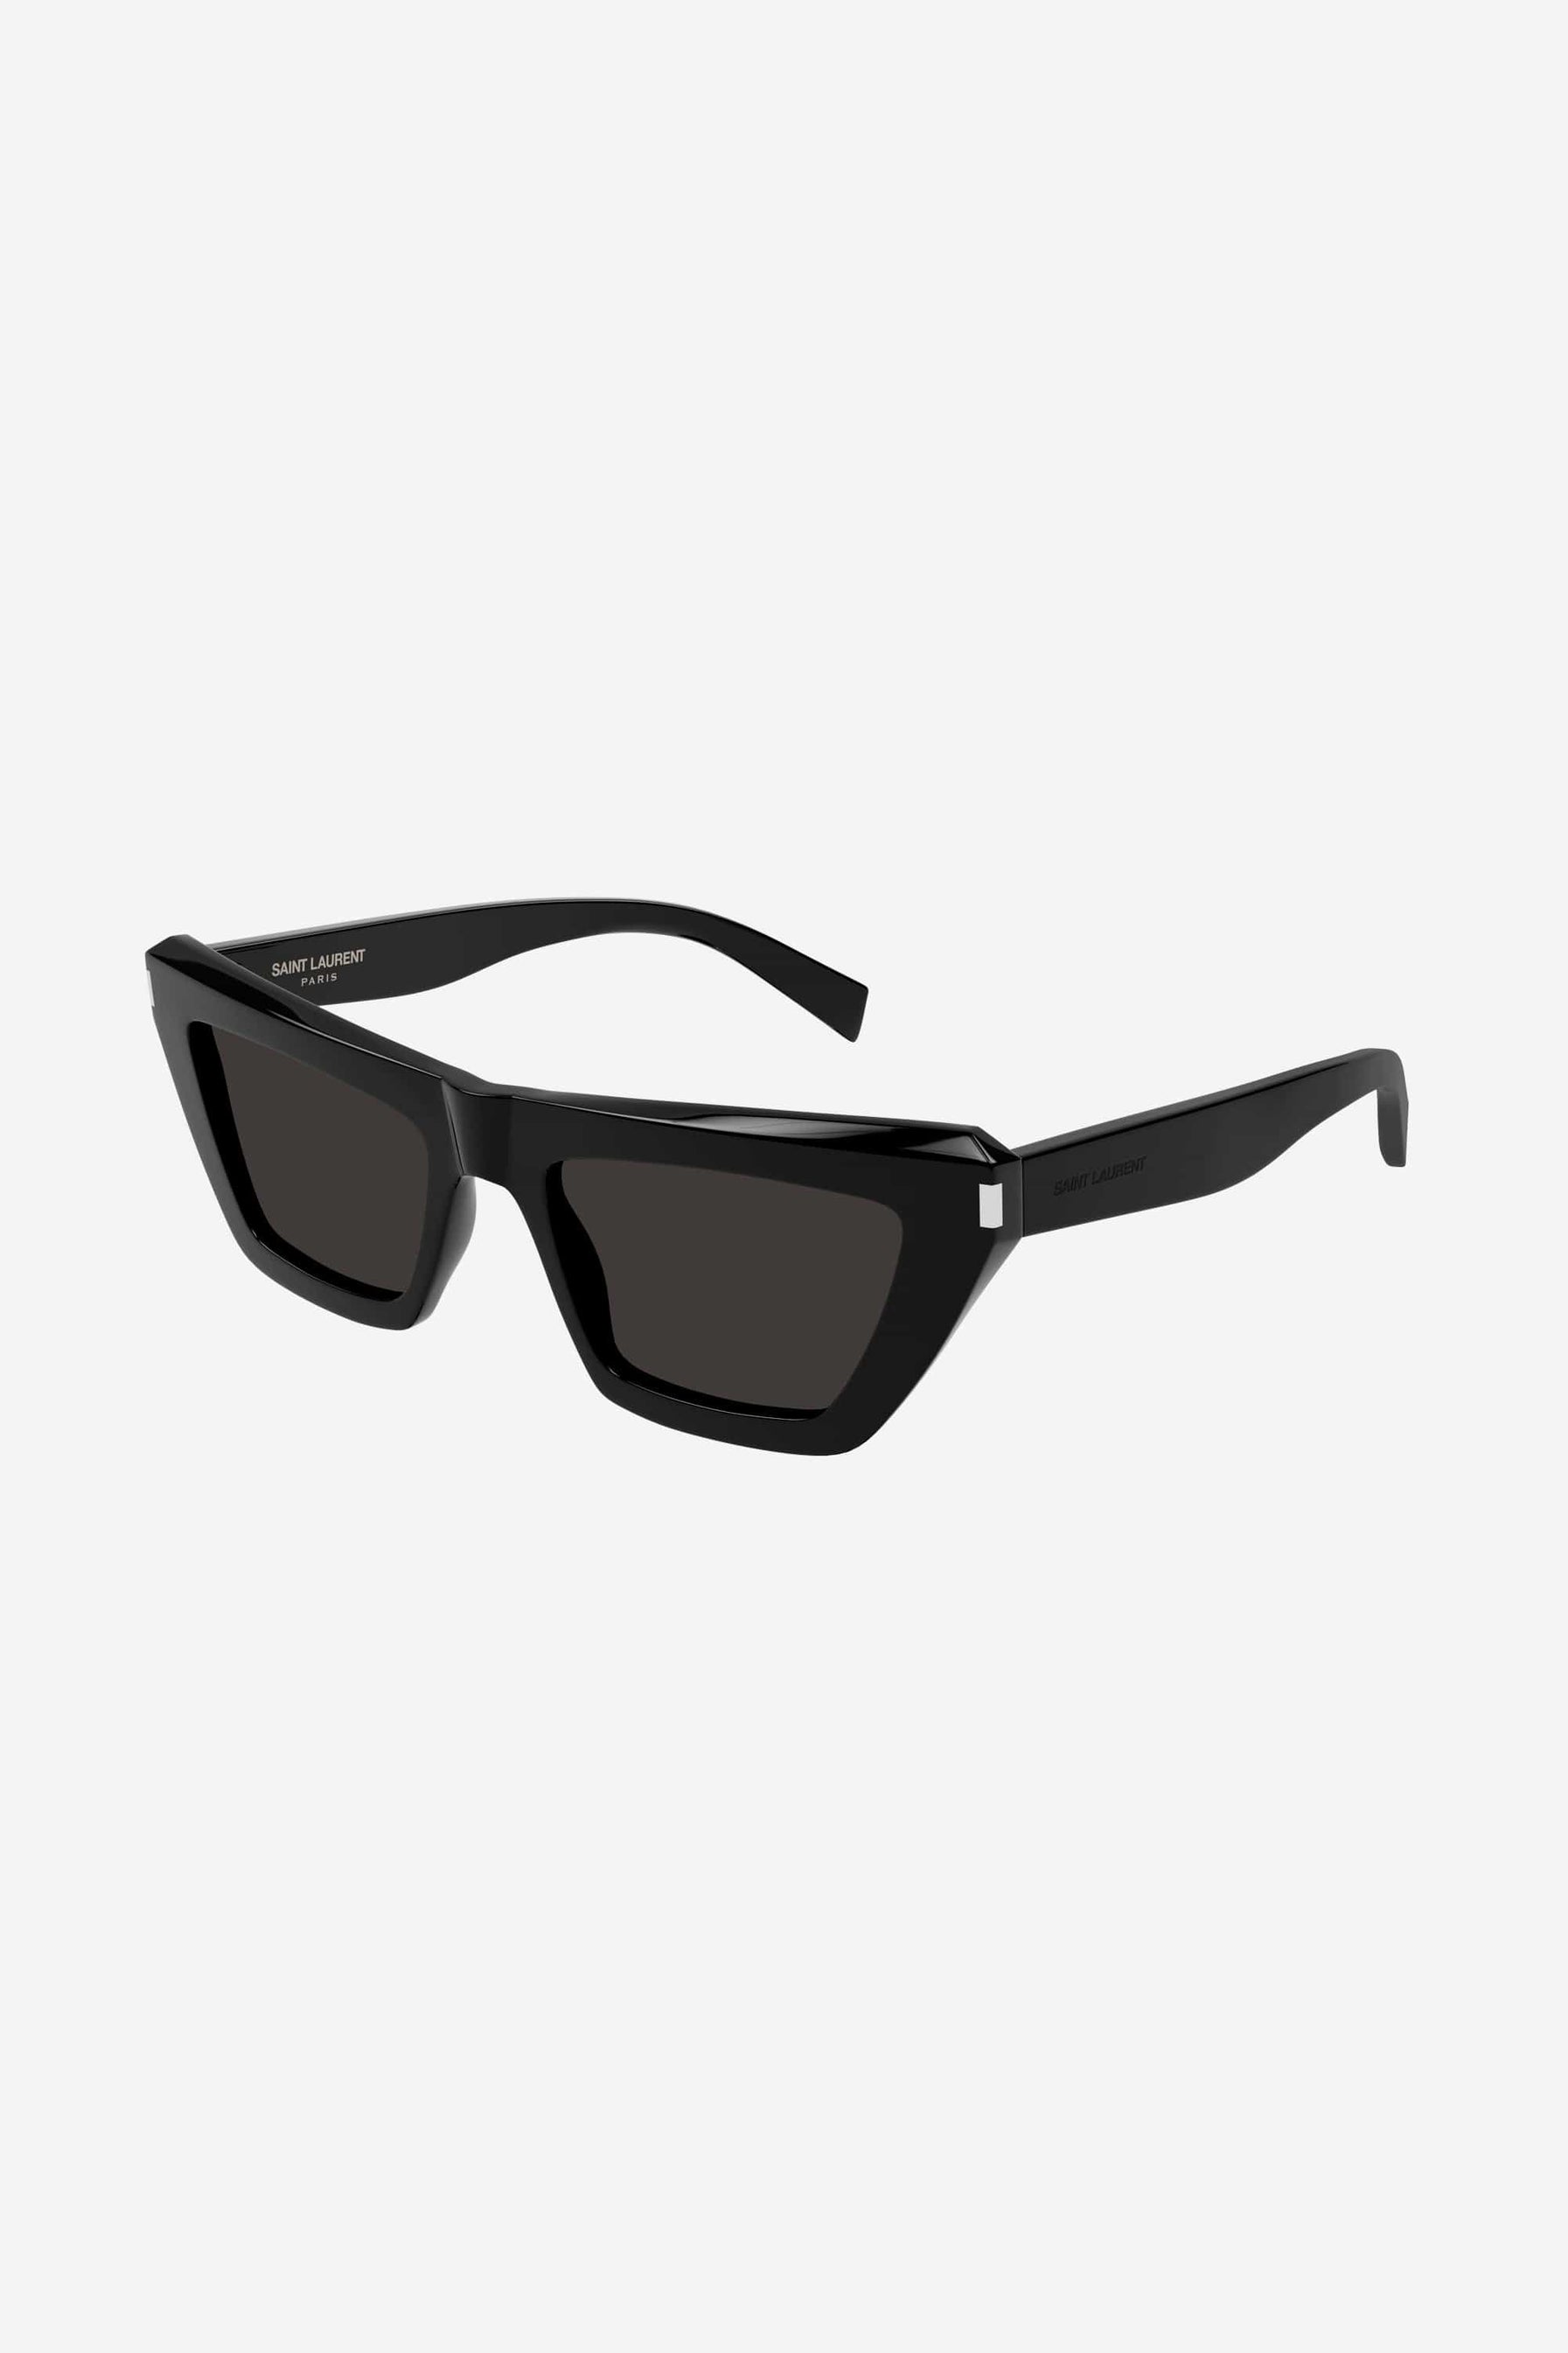 Saint Laurent narrow black cat eye sunglasses - Eyewear Club